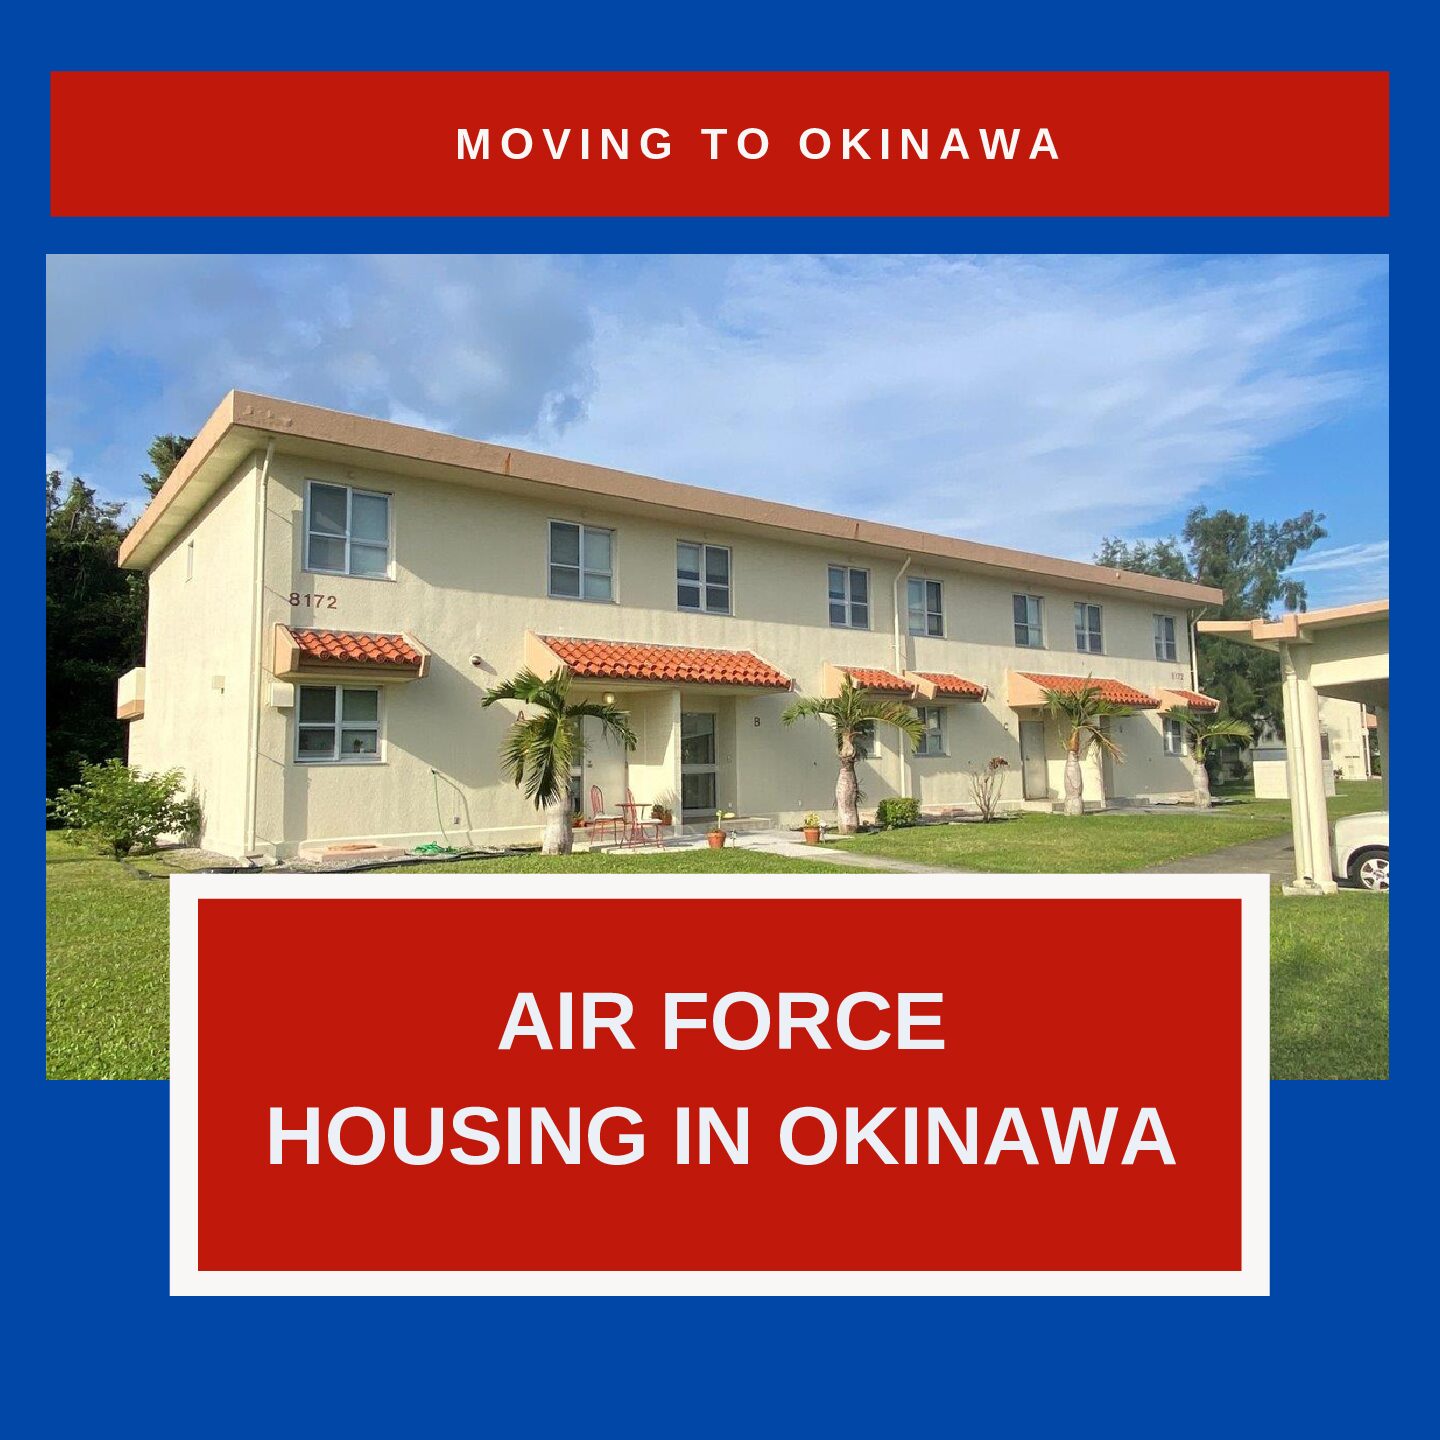 Kadena Air Force Housing in Okinawa